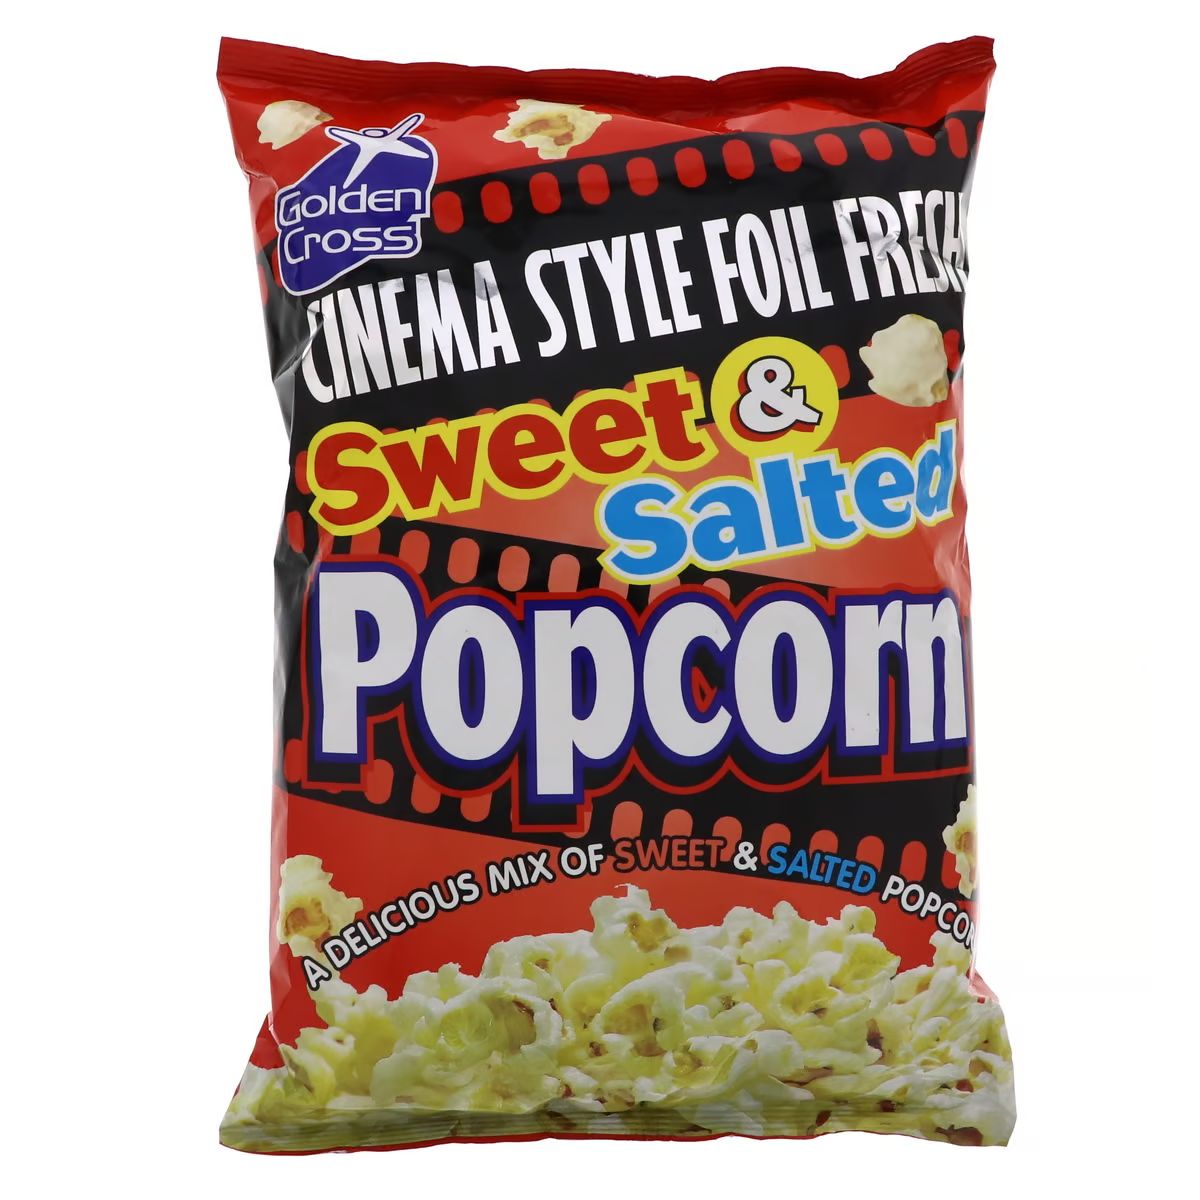 A bag of Golden Cross - Sweet & Salted Popcorn - 150g.